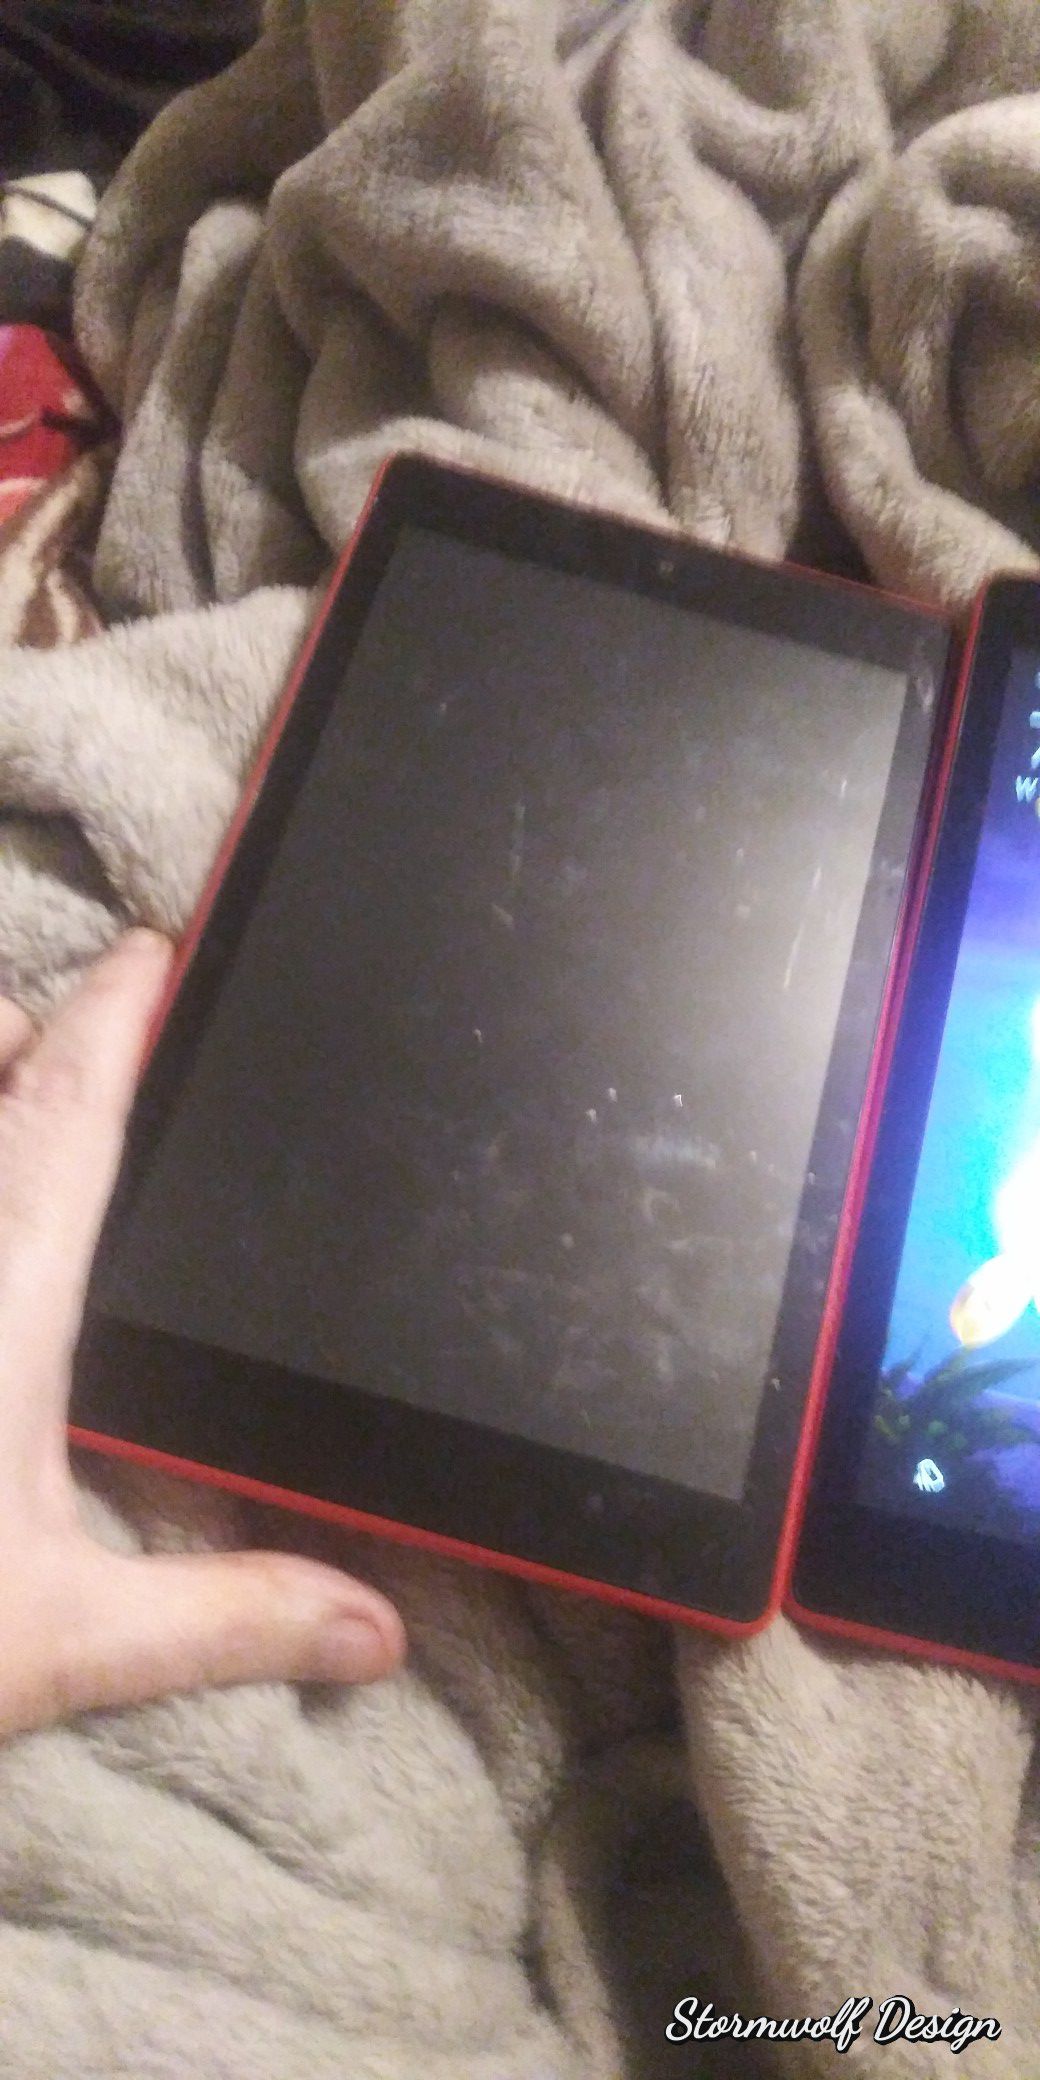 3 Kindle fire tablet hd8 orange obo